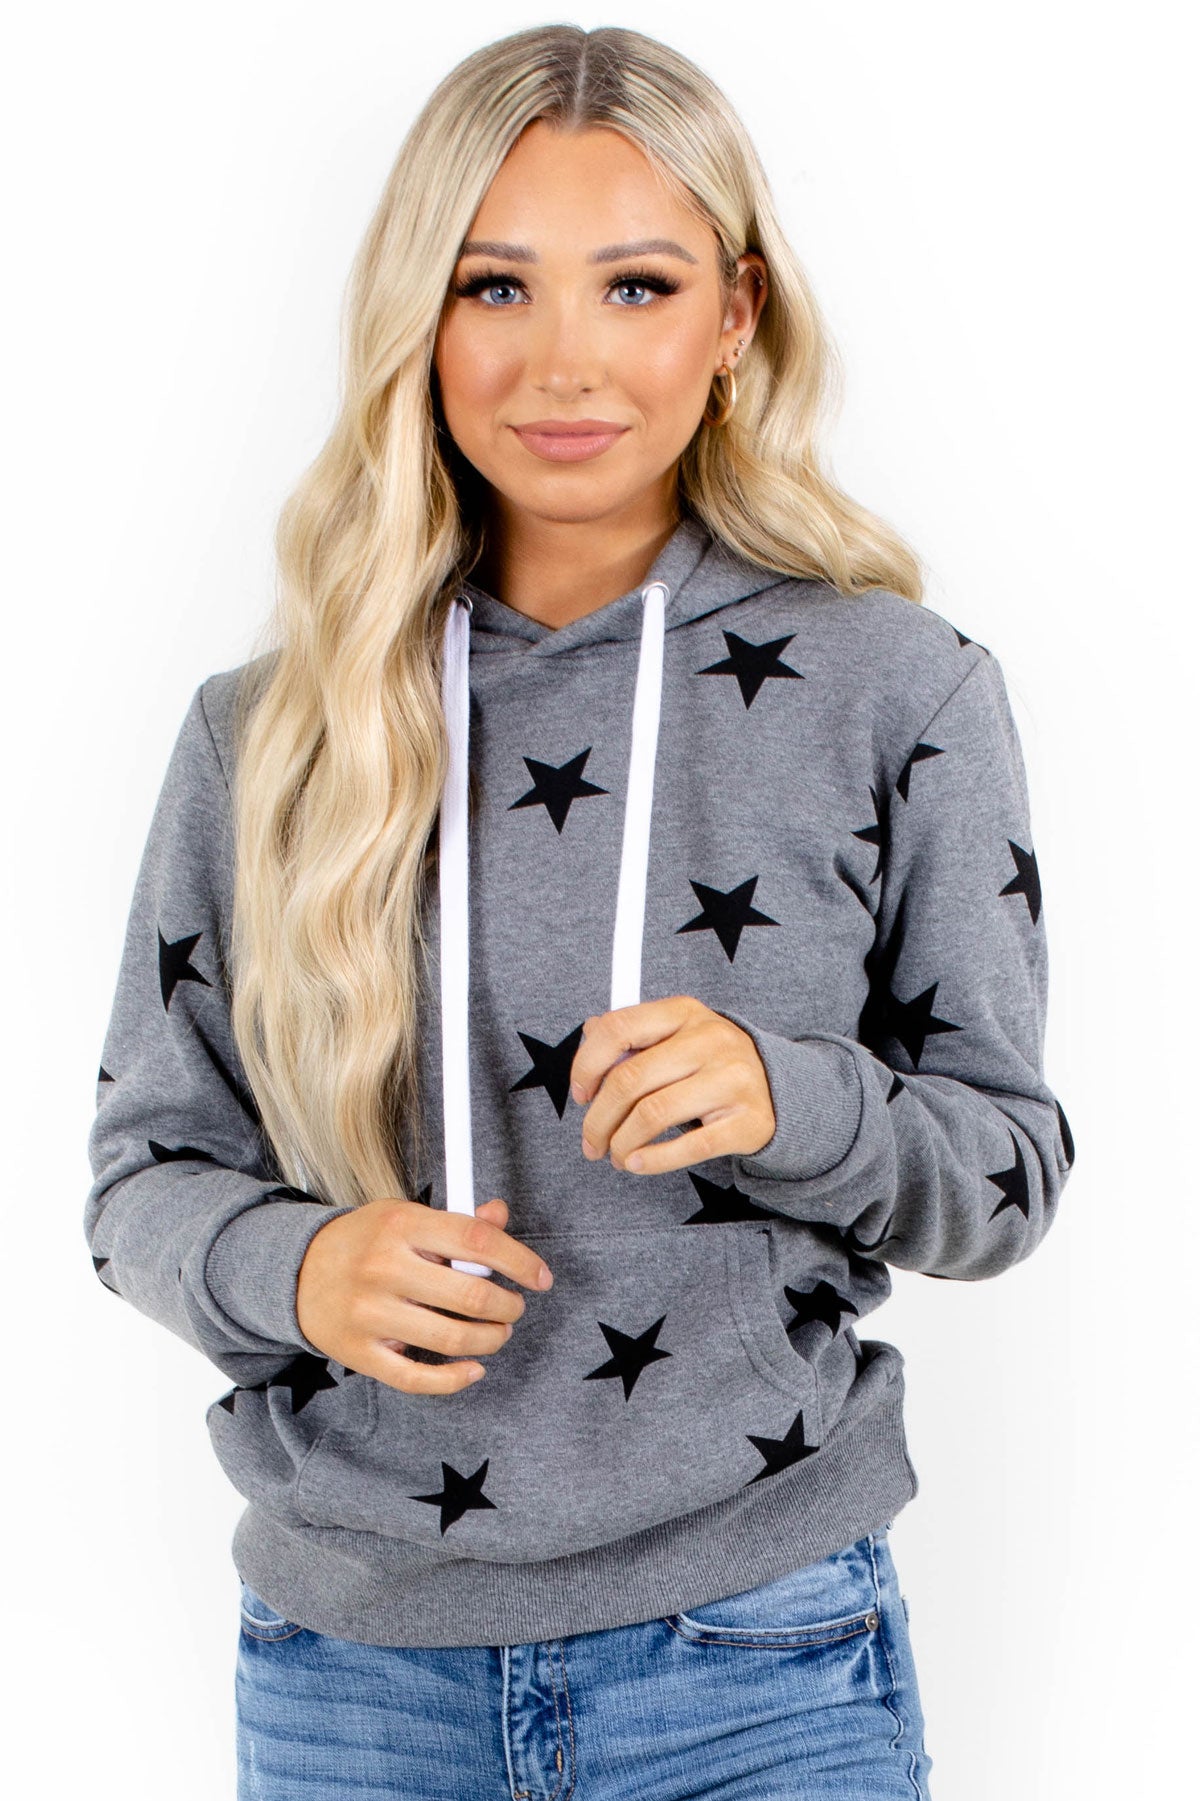 star patterned dark gray hooded top for women